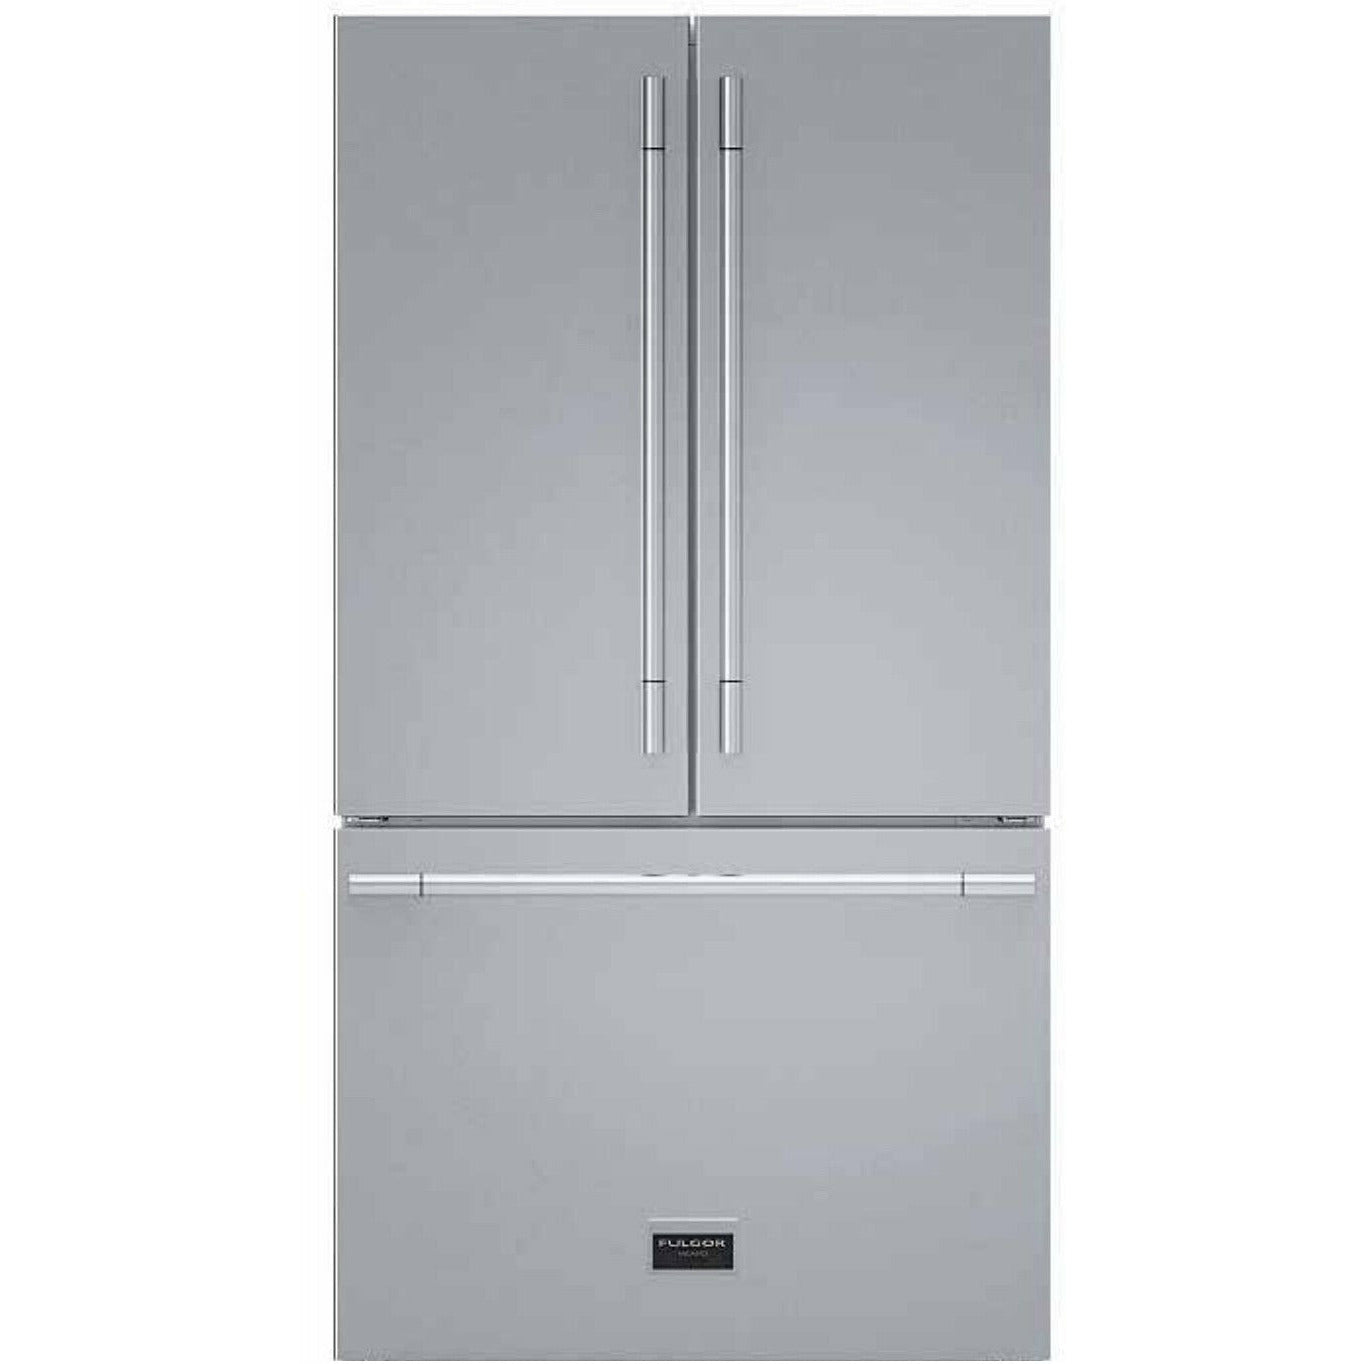 Fulgor Milano 36" Freestanding Counter Depth French Door Refrigerator with 19.86 cu. Ft. Total Capacity - F6FBM36S2